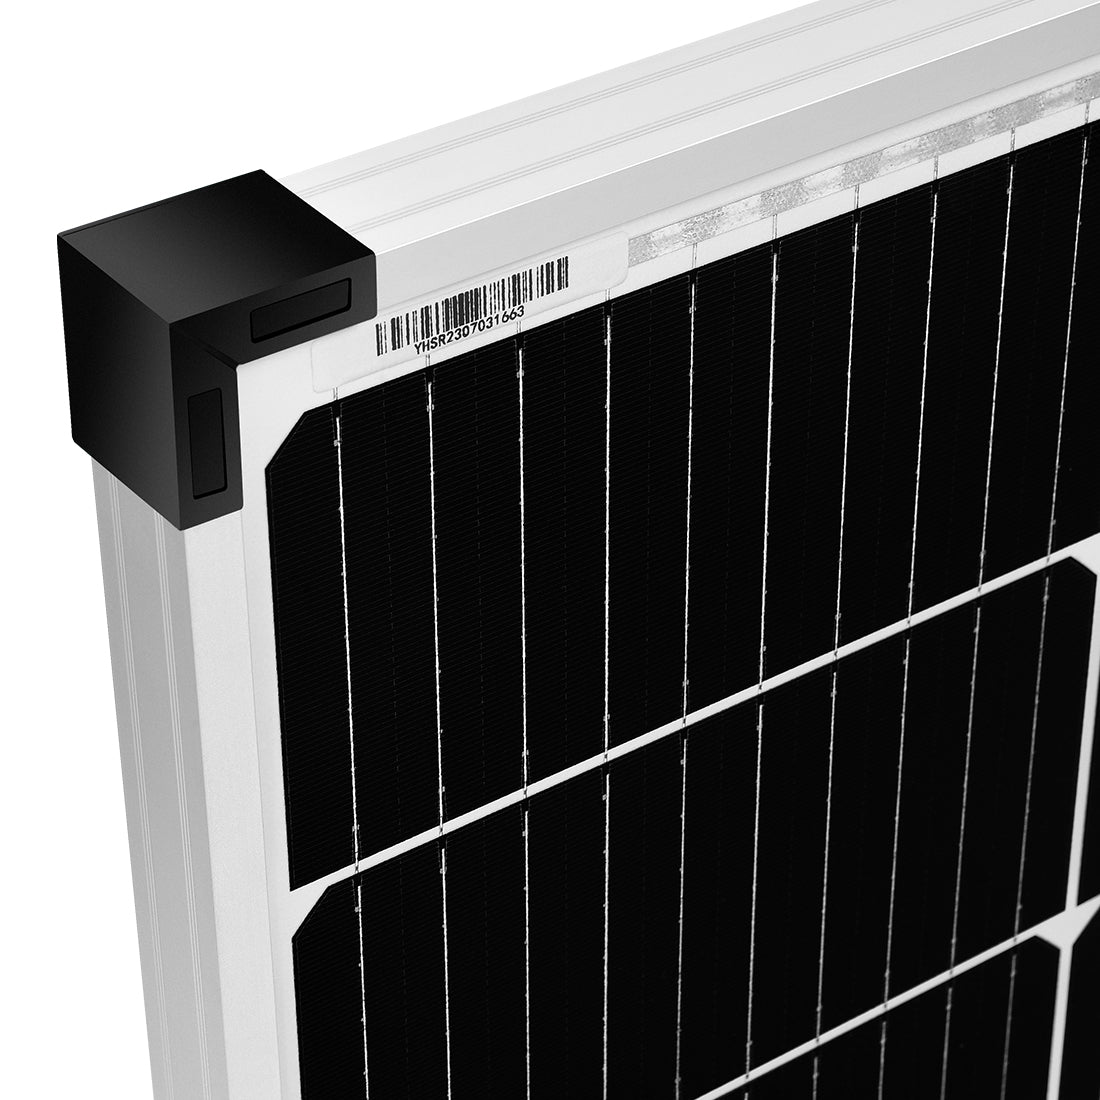 VoltX 12V 130W Mono Fixed Solar Panel